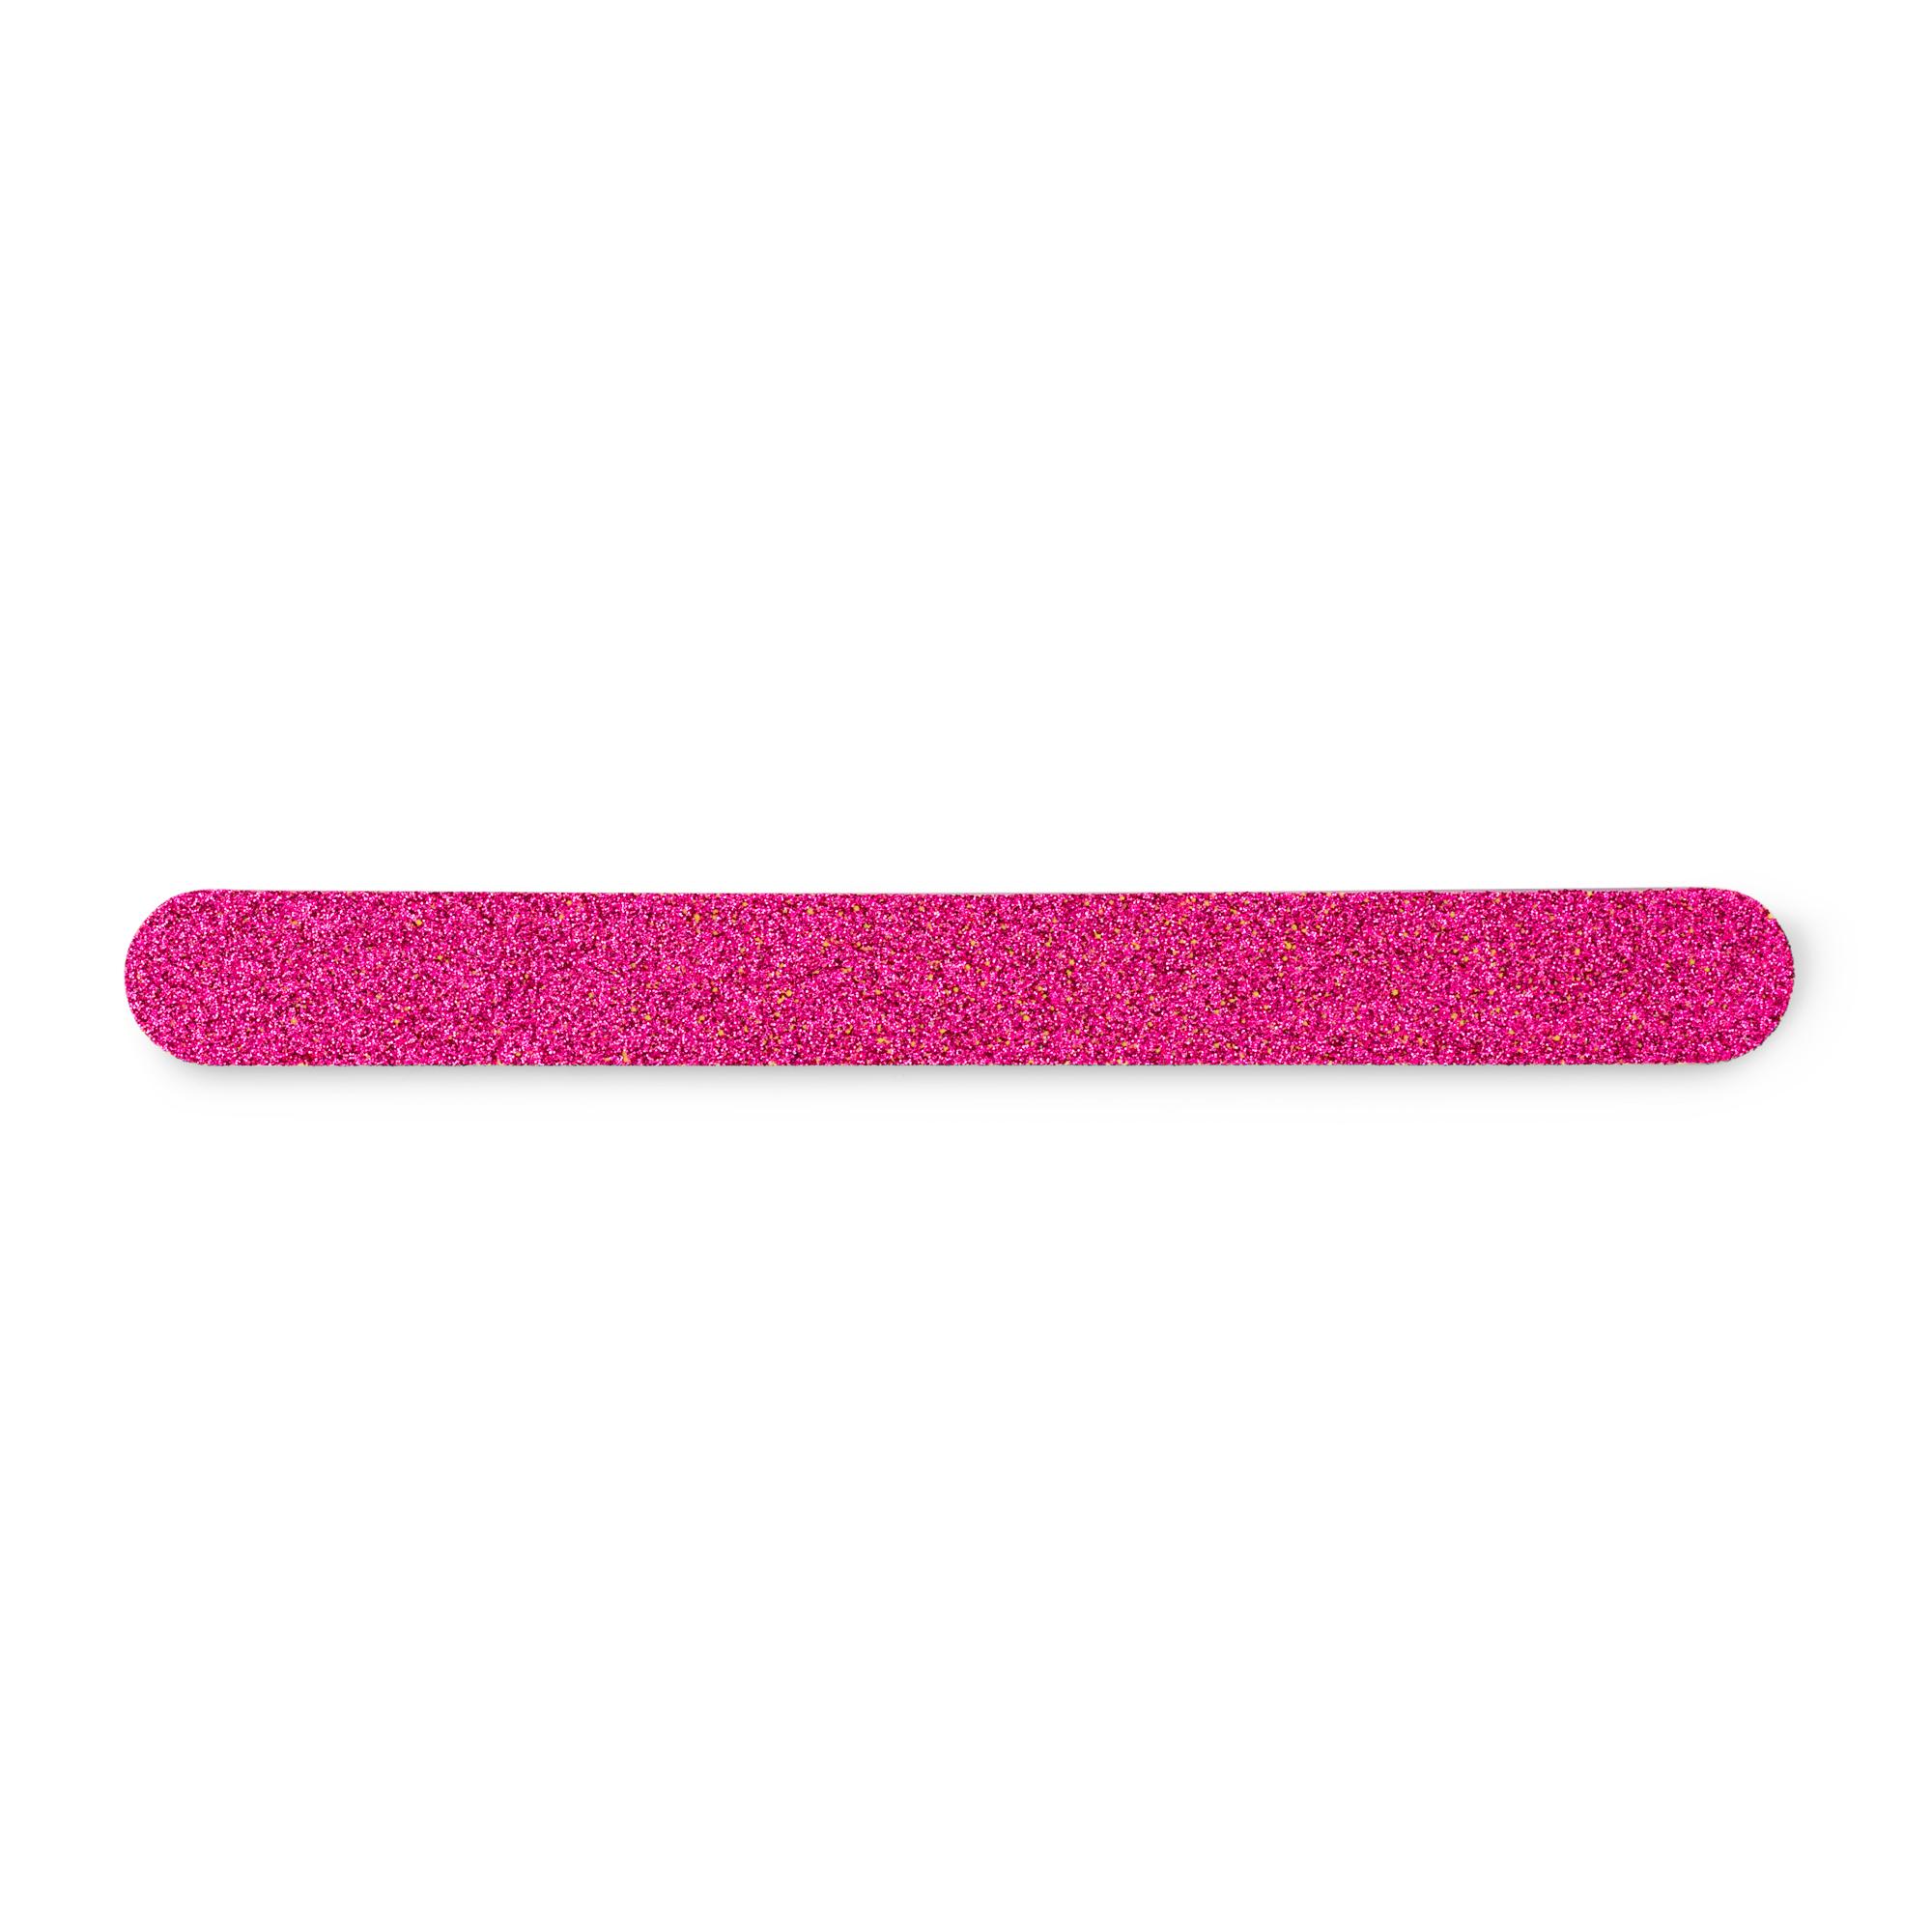 Product Shop Rawr Beauty - Professional Glitter Nail File 180 Gritt - Pink image